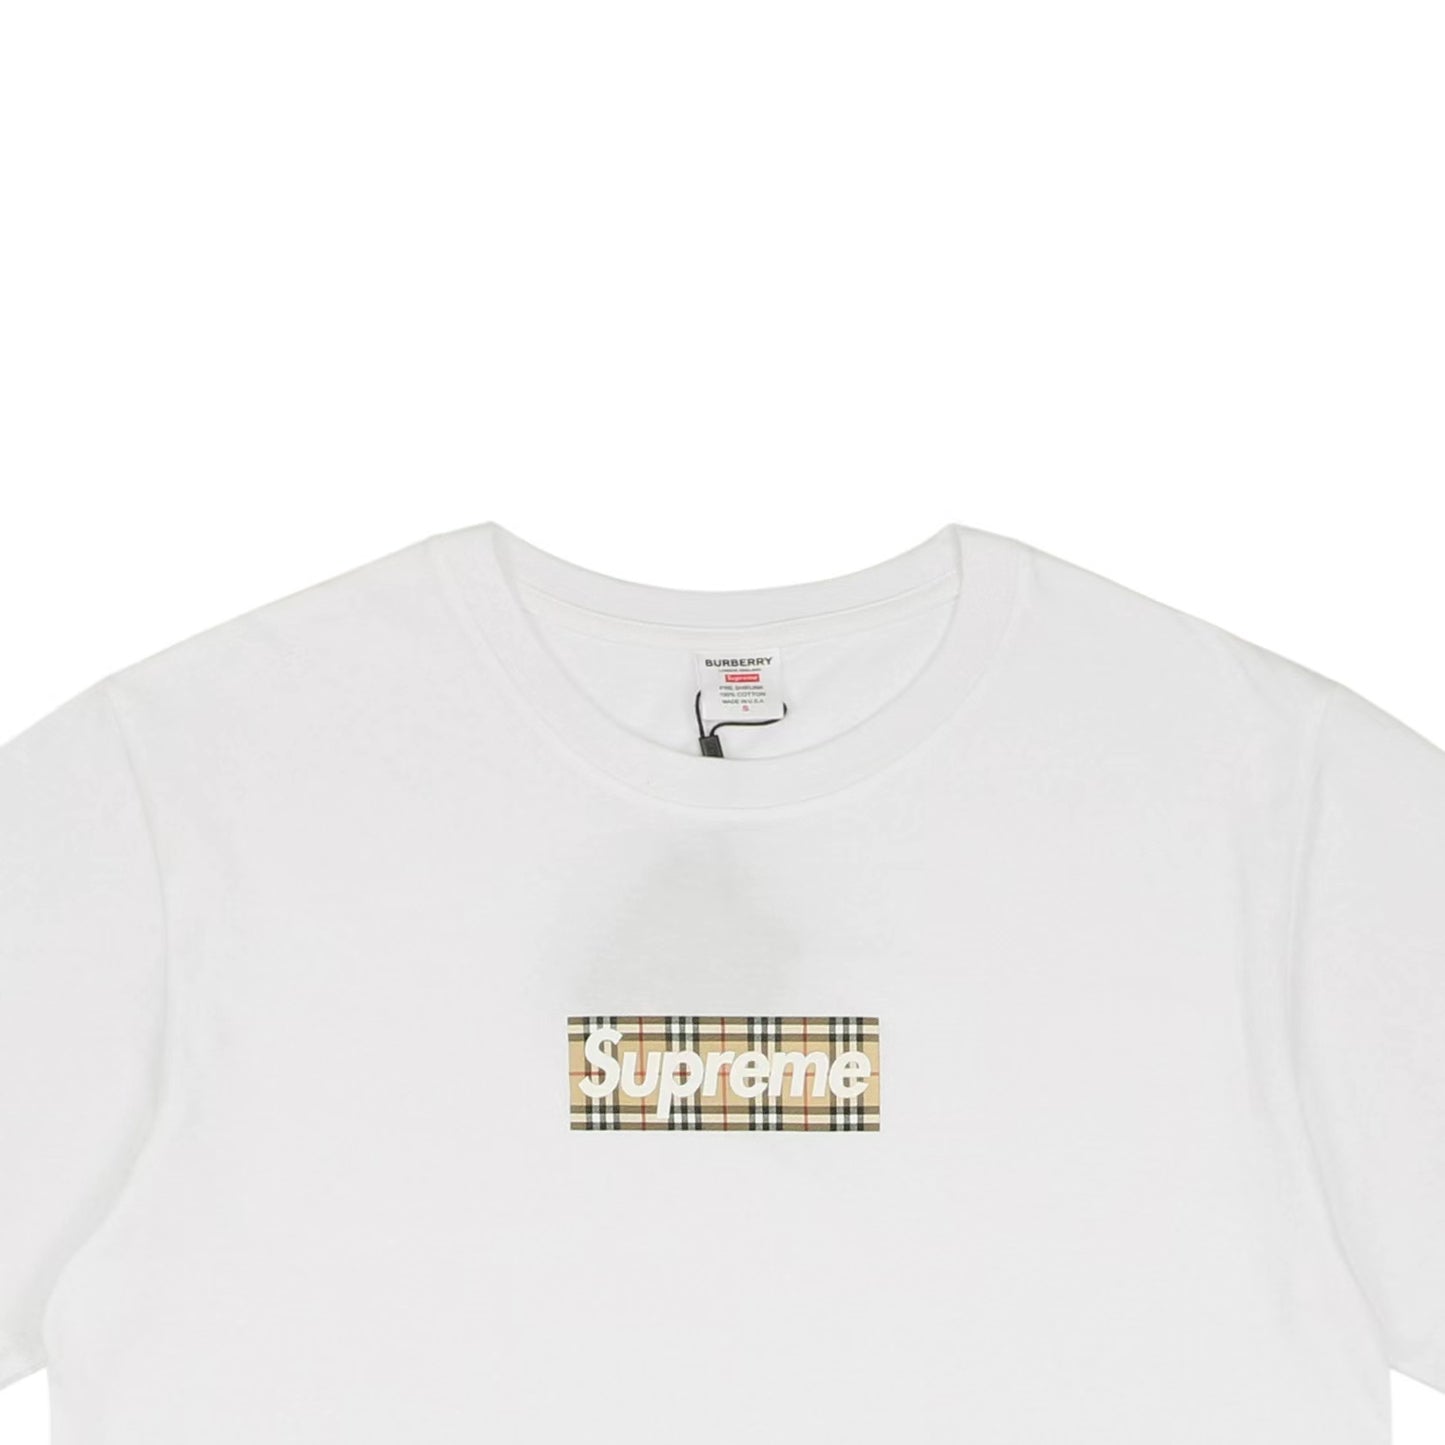 Burbrry x Supreme White T-Shirt